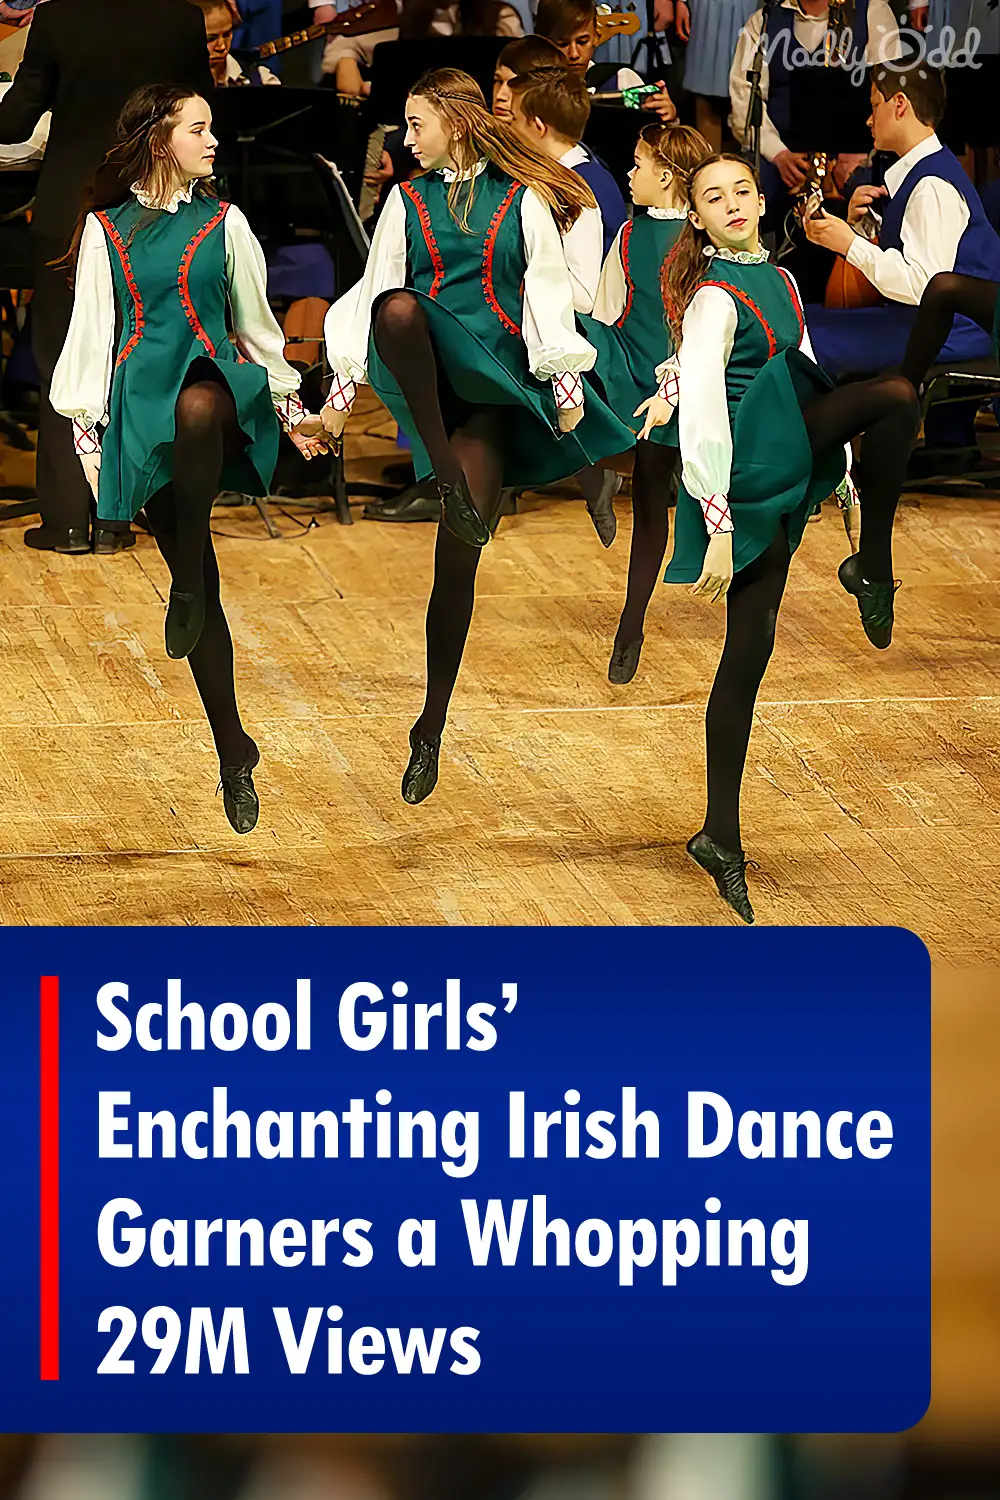 School Girls’ Enchanting Irish Dance Garners a Whopping 29M Views